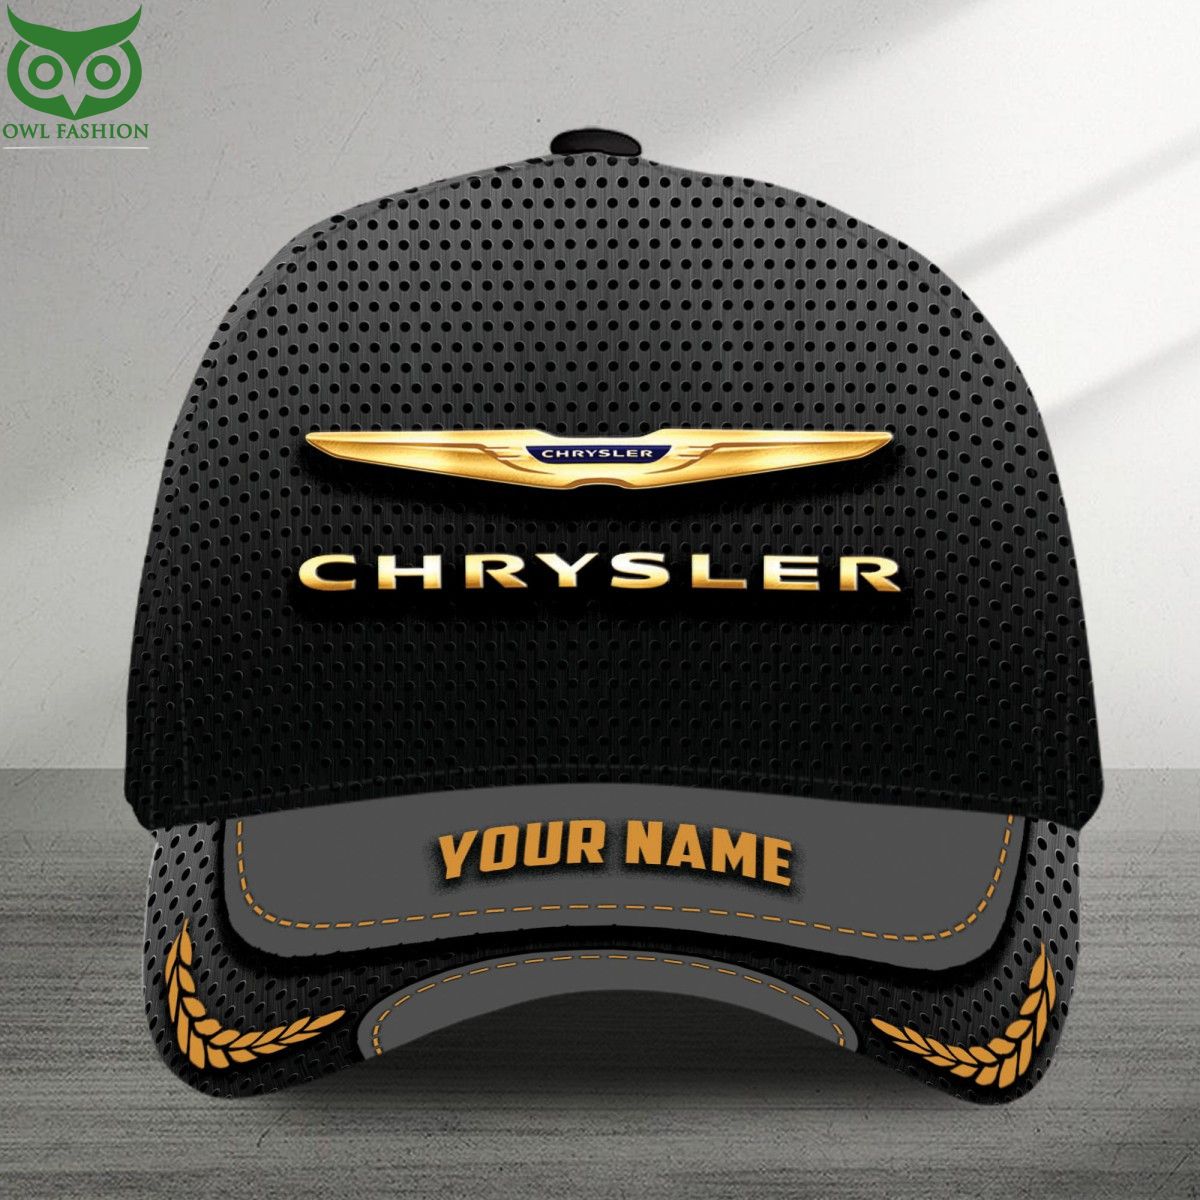 chrysler luxury logo brand personalized classic cap 2 9sjwQ.jpg